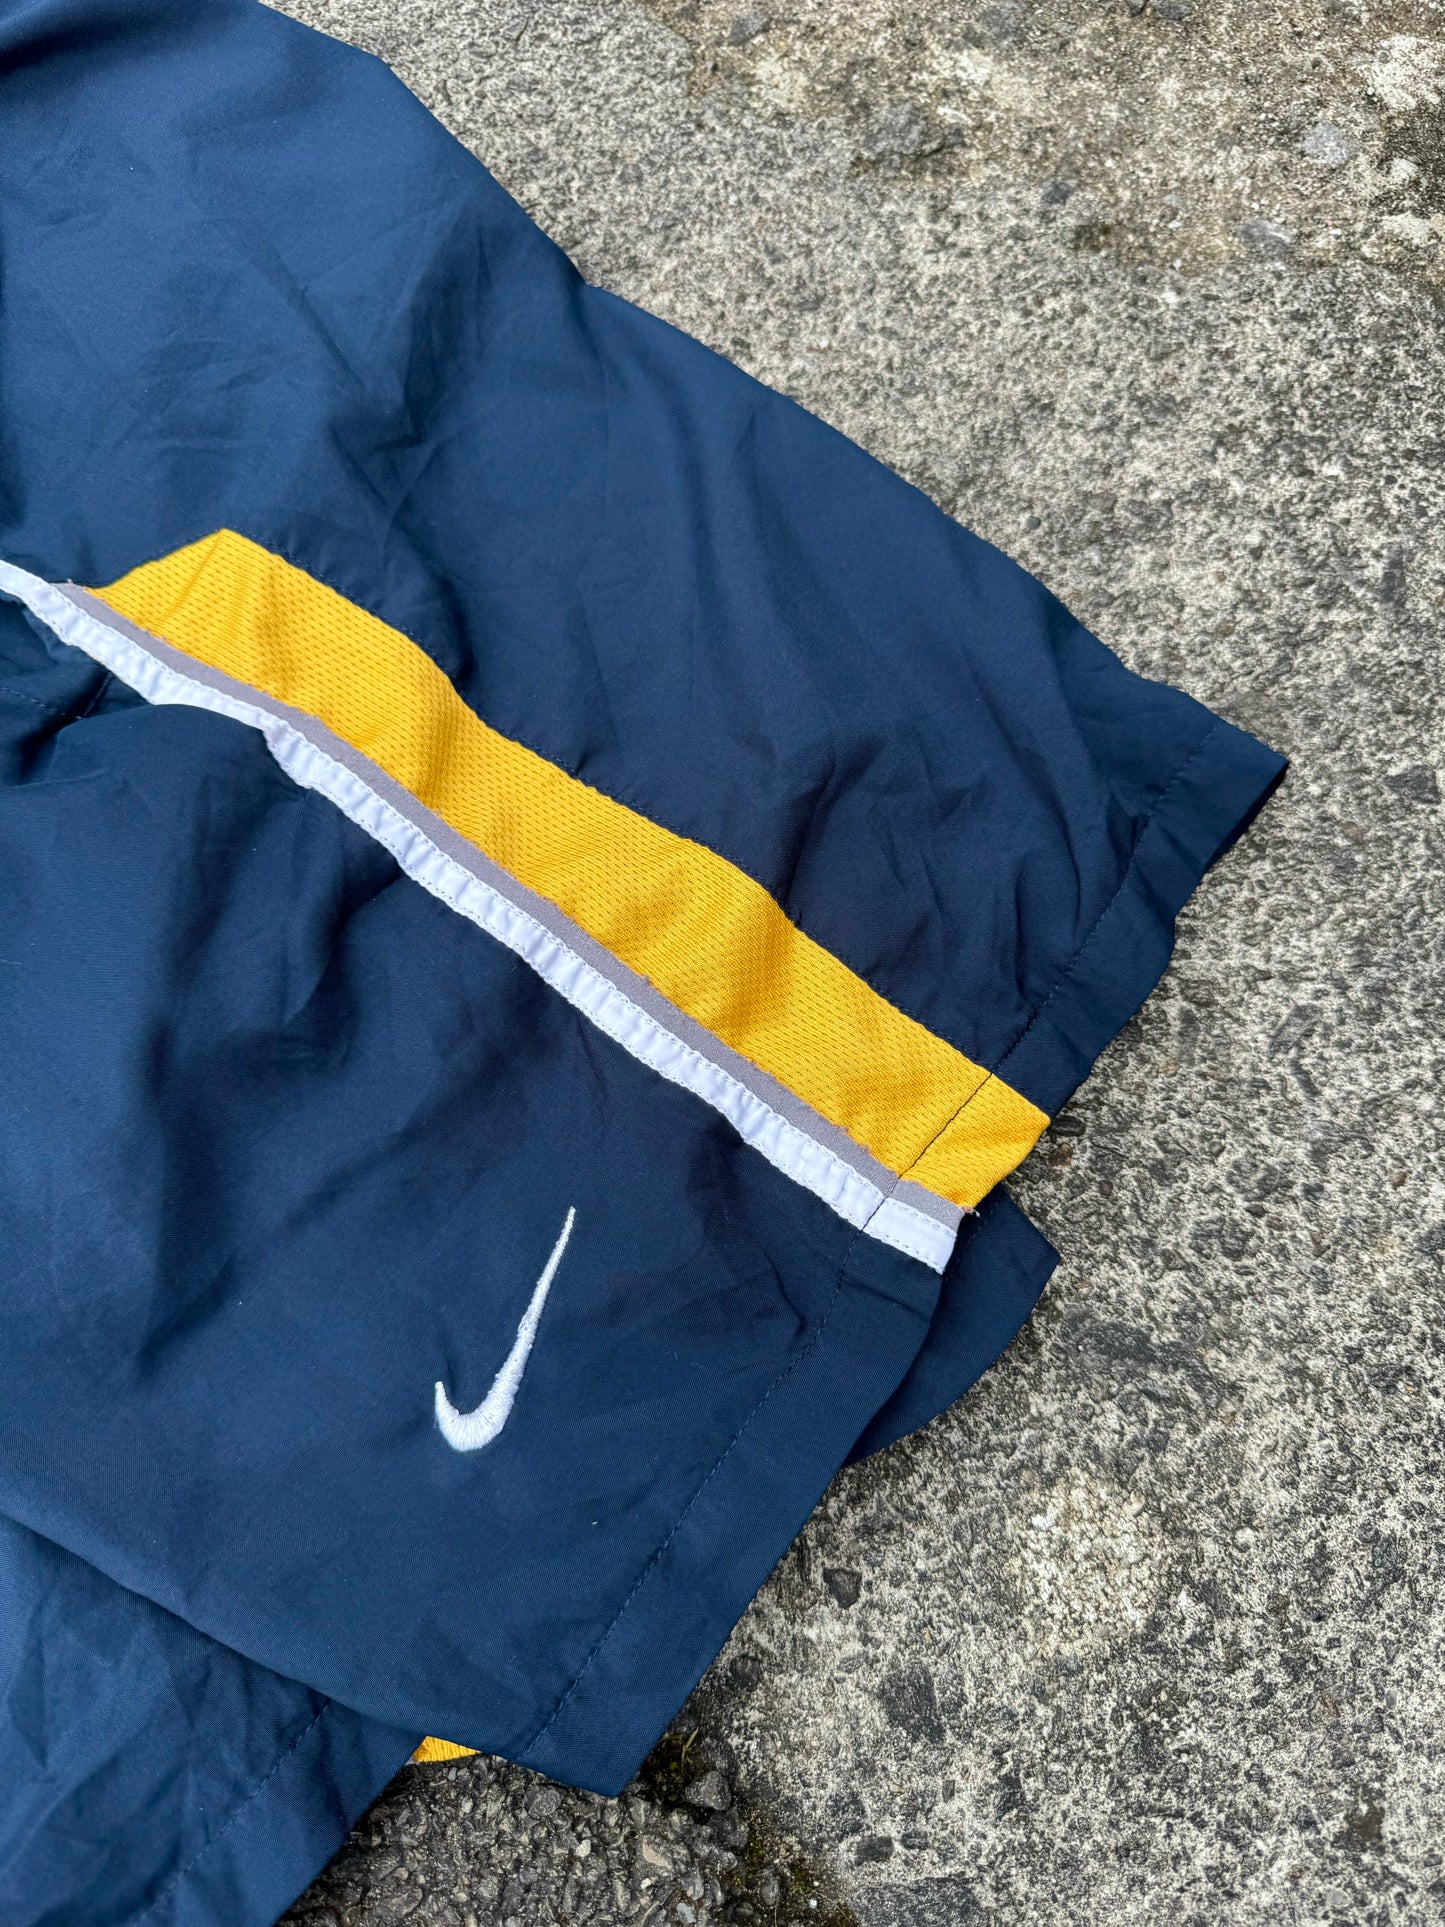 Navy / Yellow Nike Swoosh Shorts